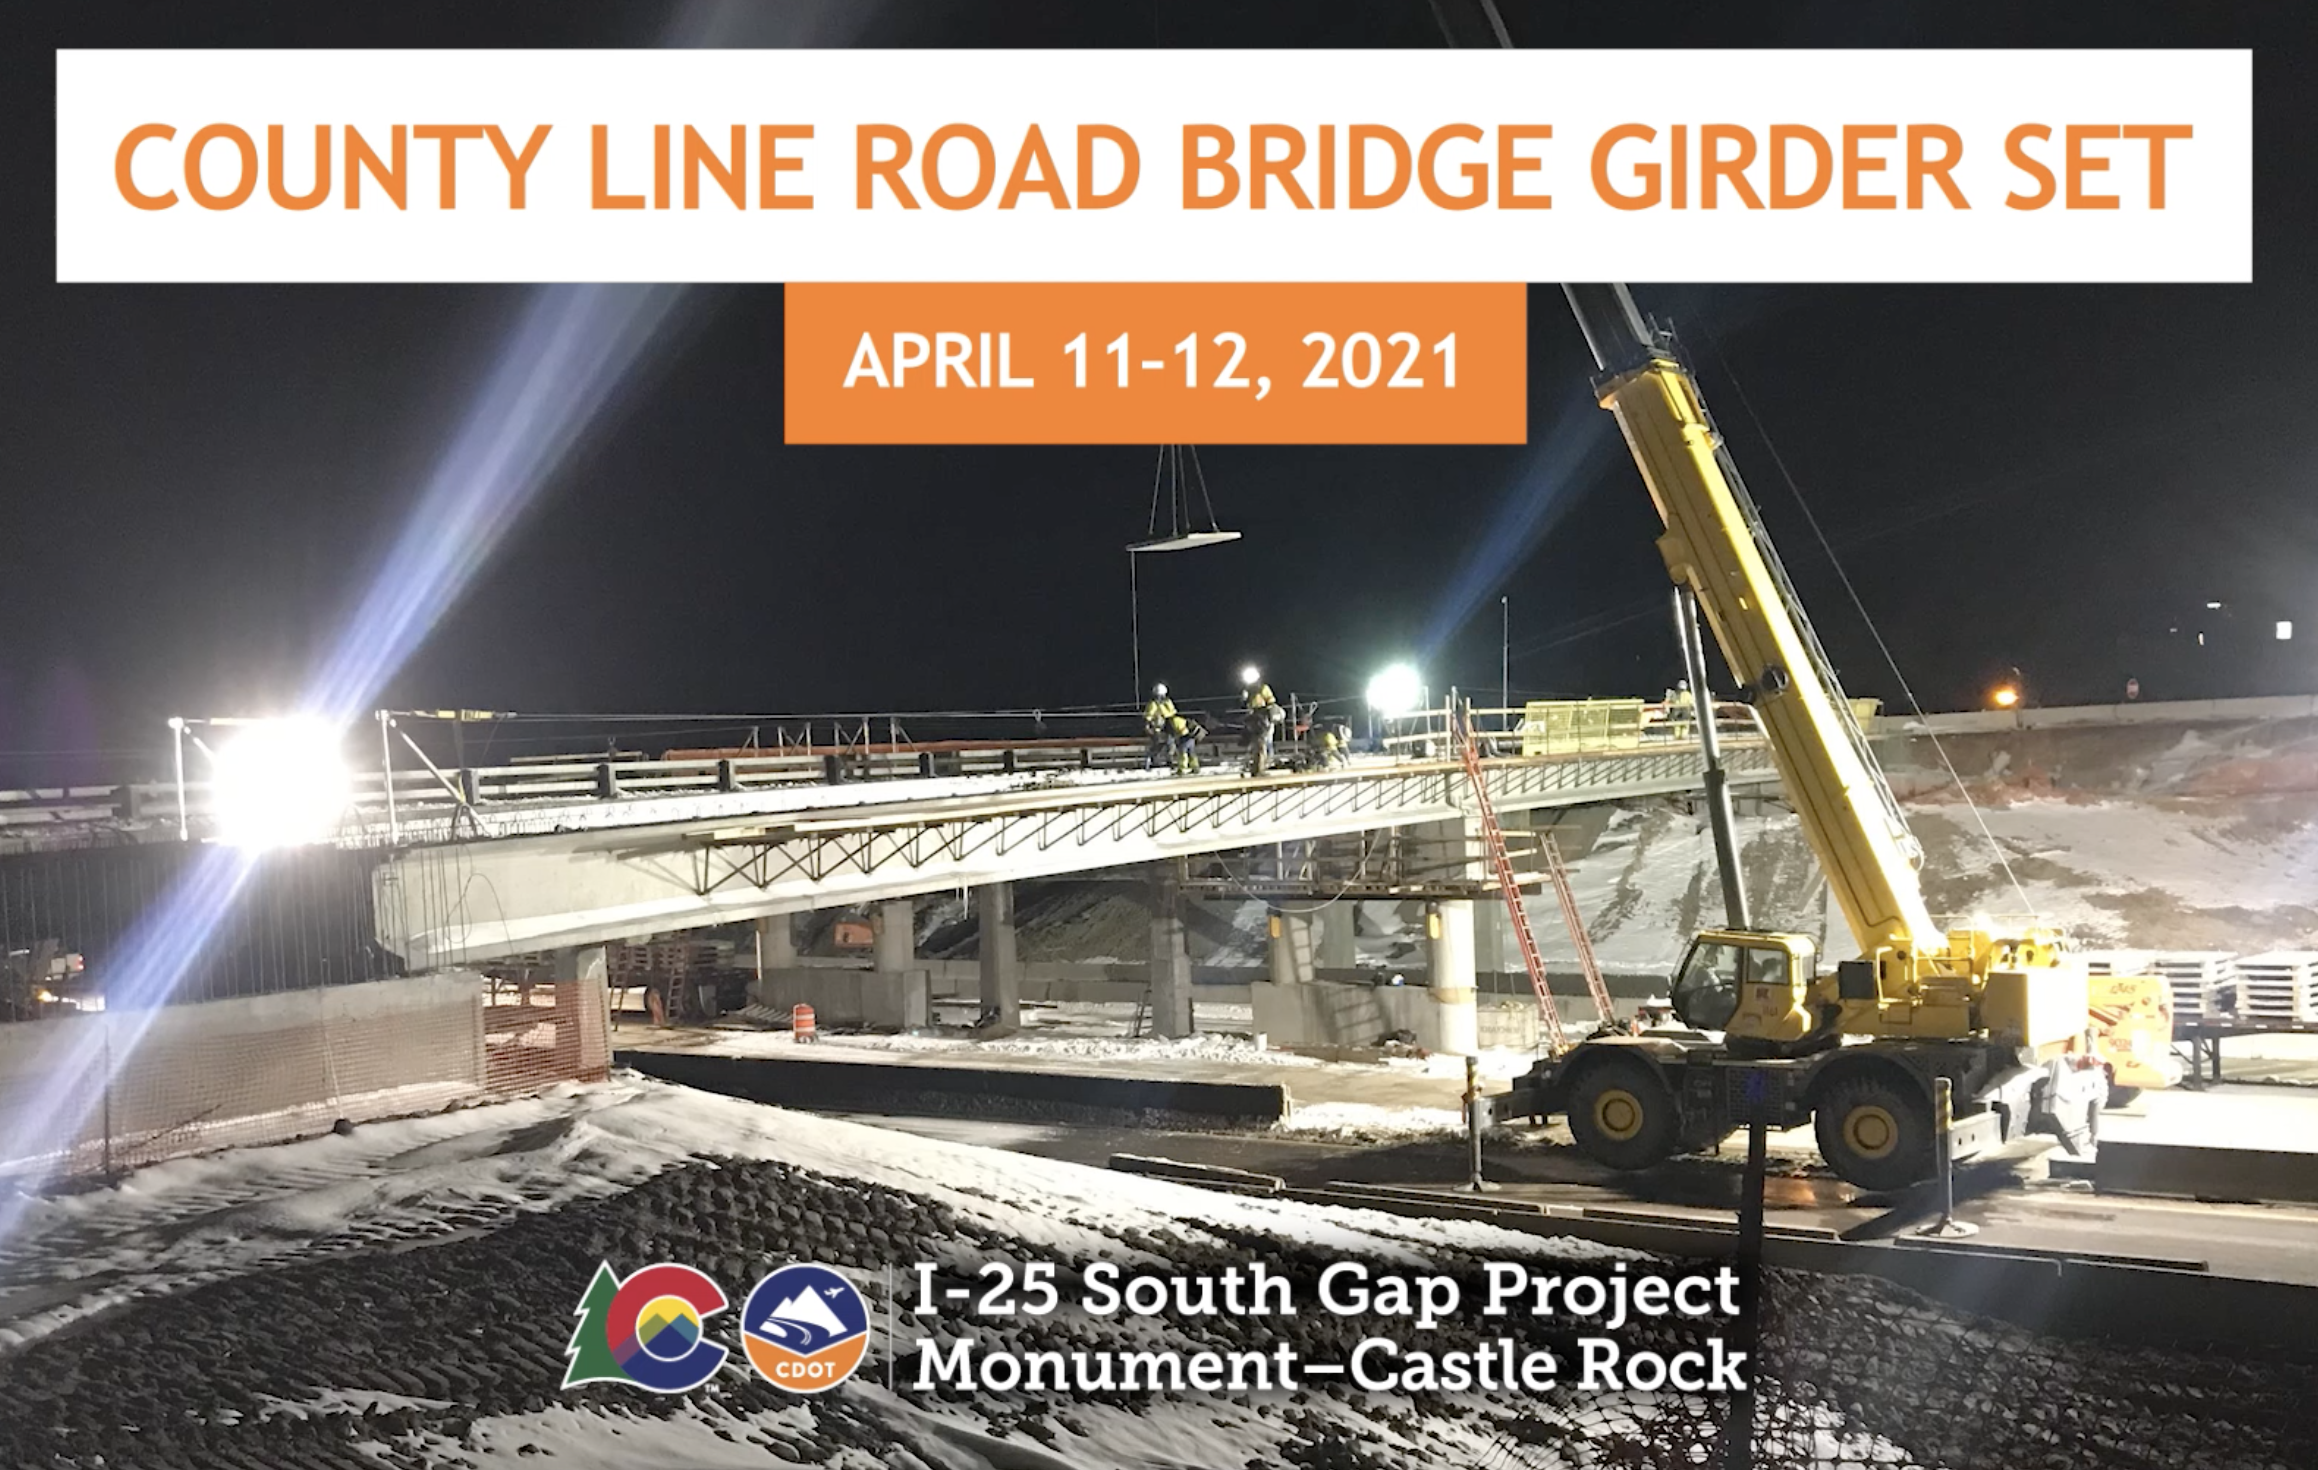  I-25 South Gap County Line Road Bridge Girder Set.png detail image